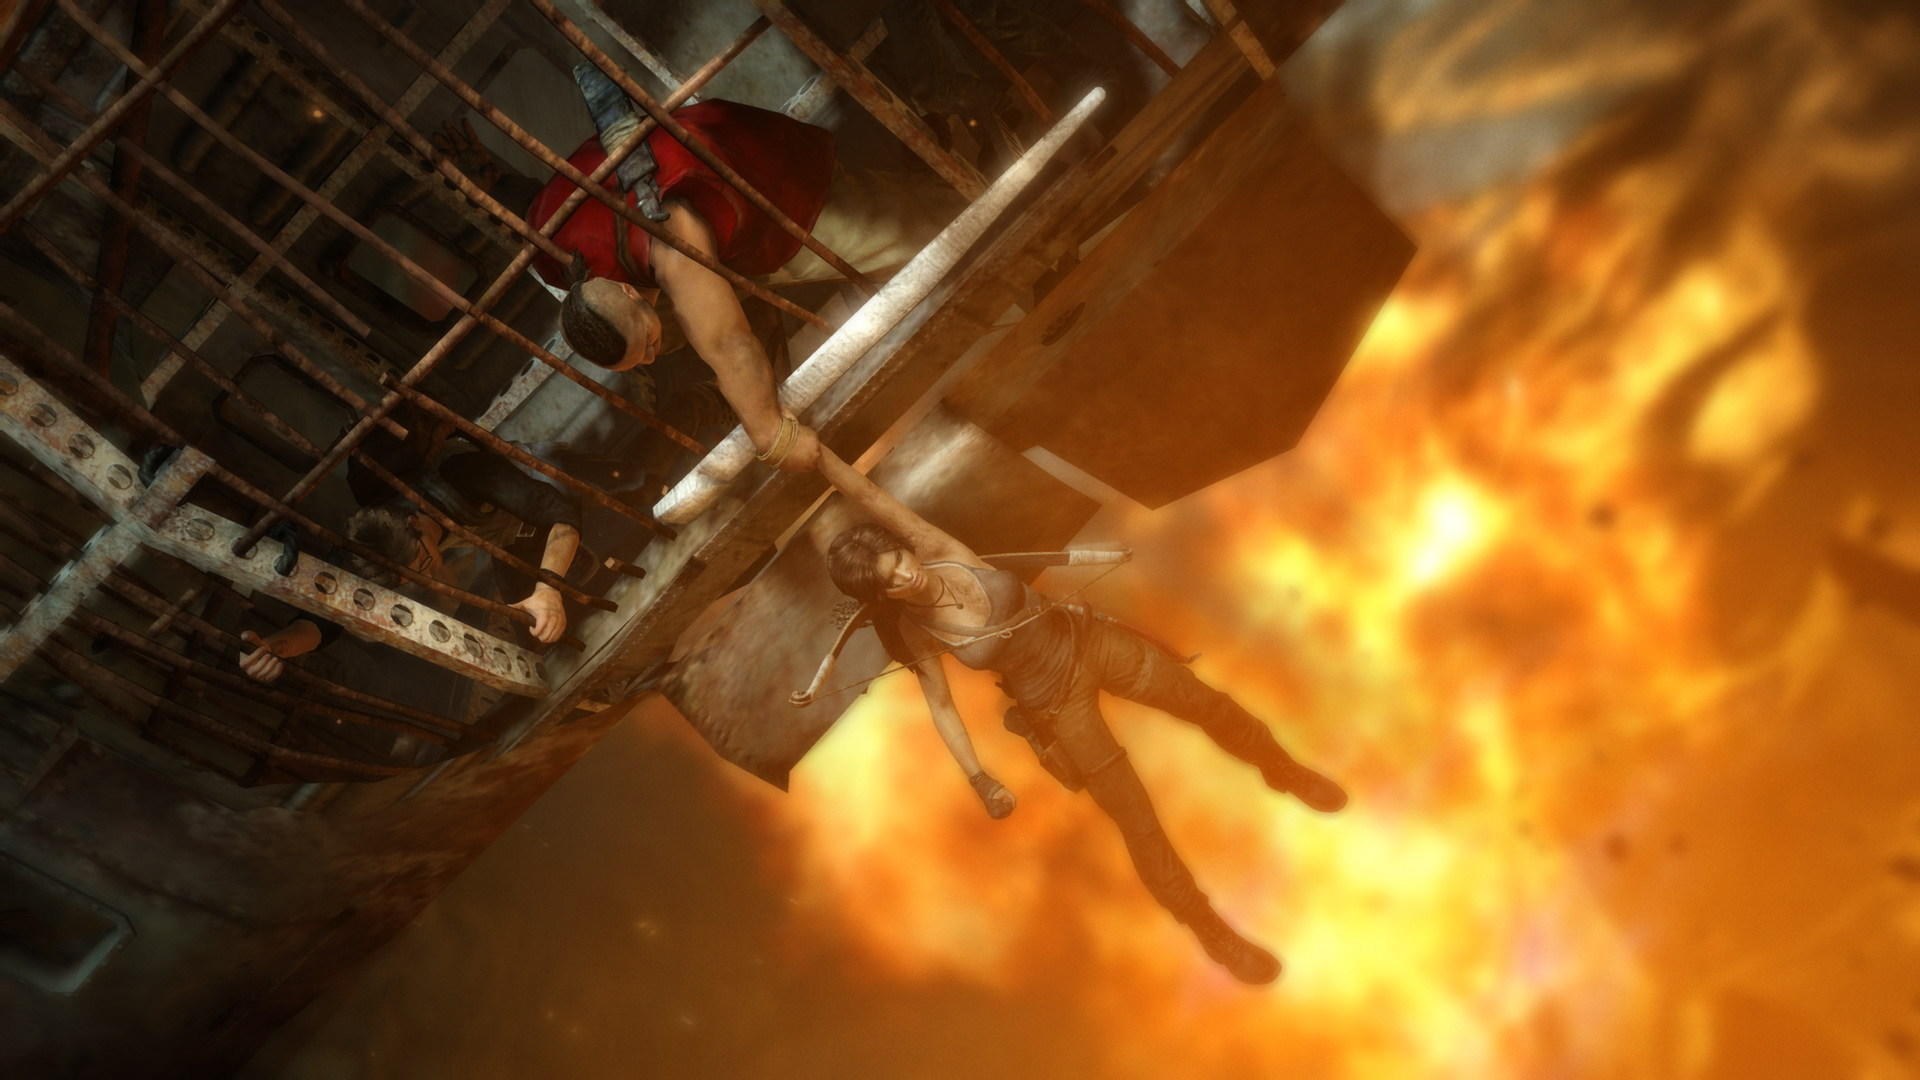 Tomb Raider screenshot game